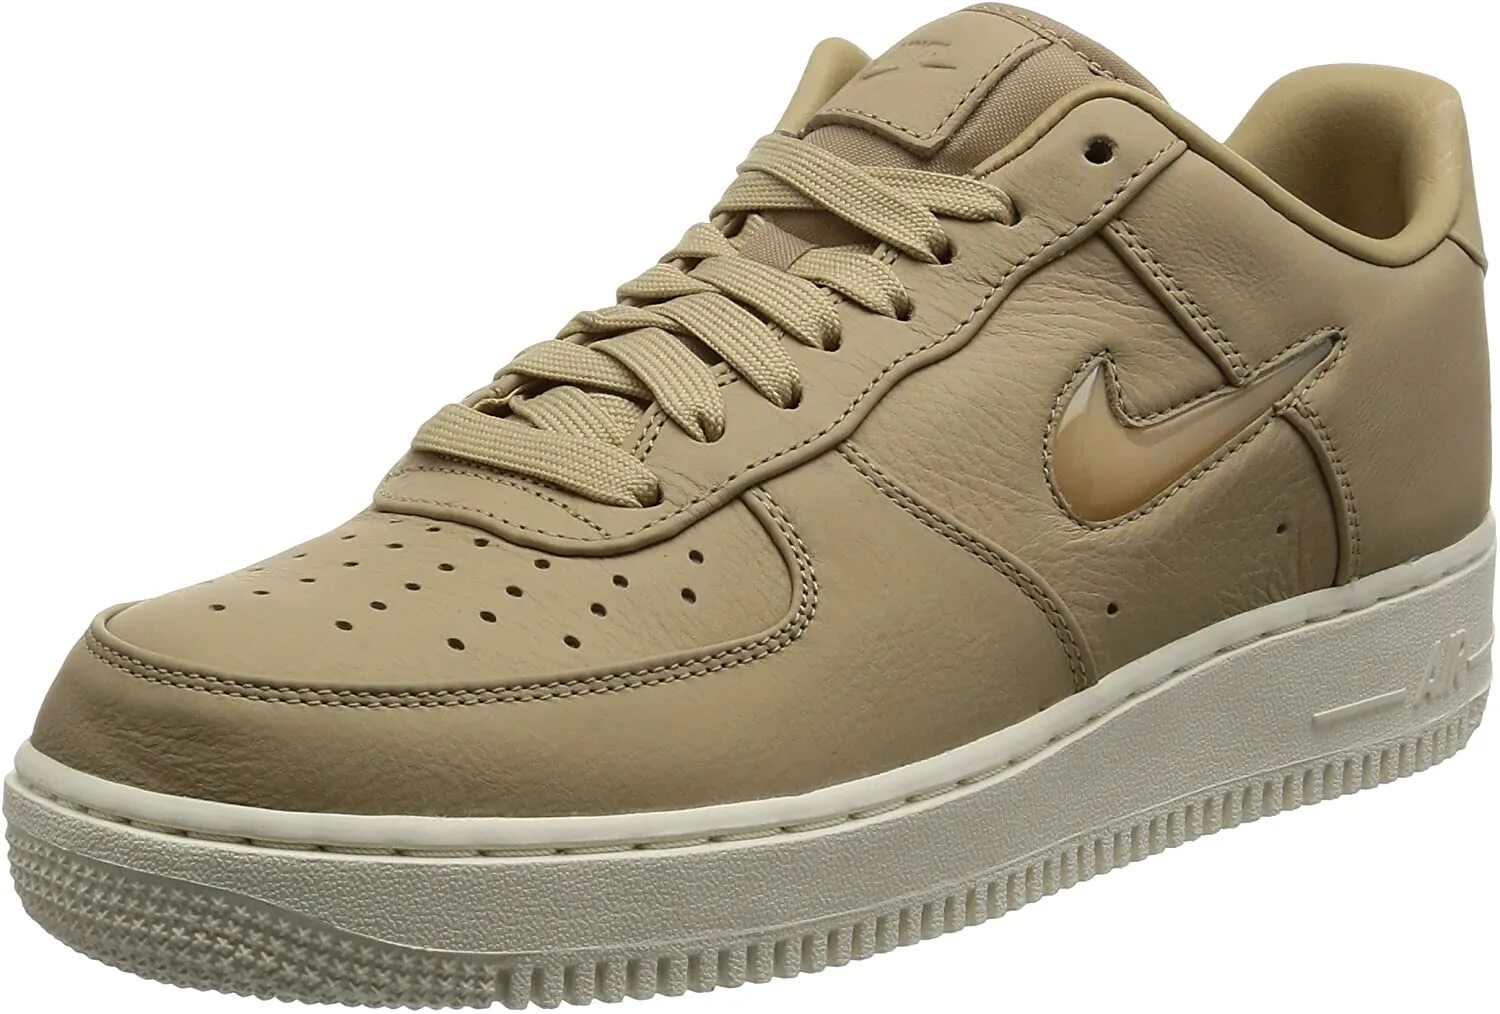 Nike Force 1 Leather. Nike Air Force 1 lv. Nike Air Force 1 '07 Premium. Air Force 1 Premium. Купить мужские air force